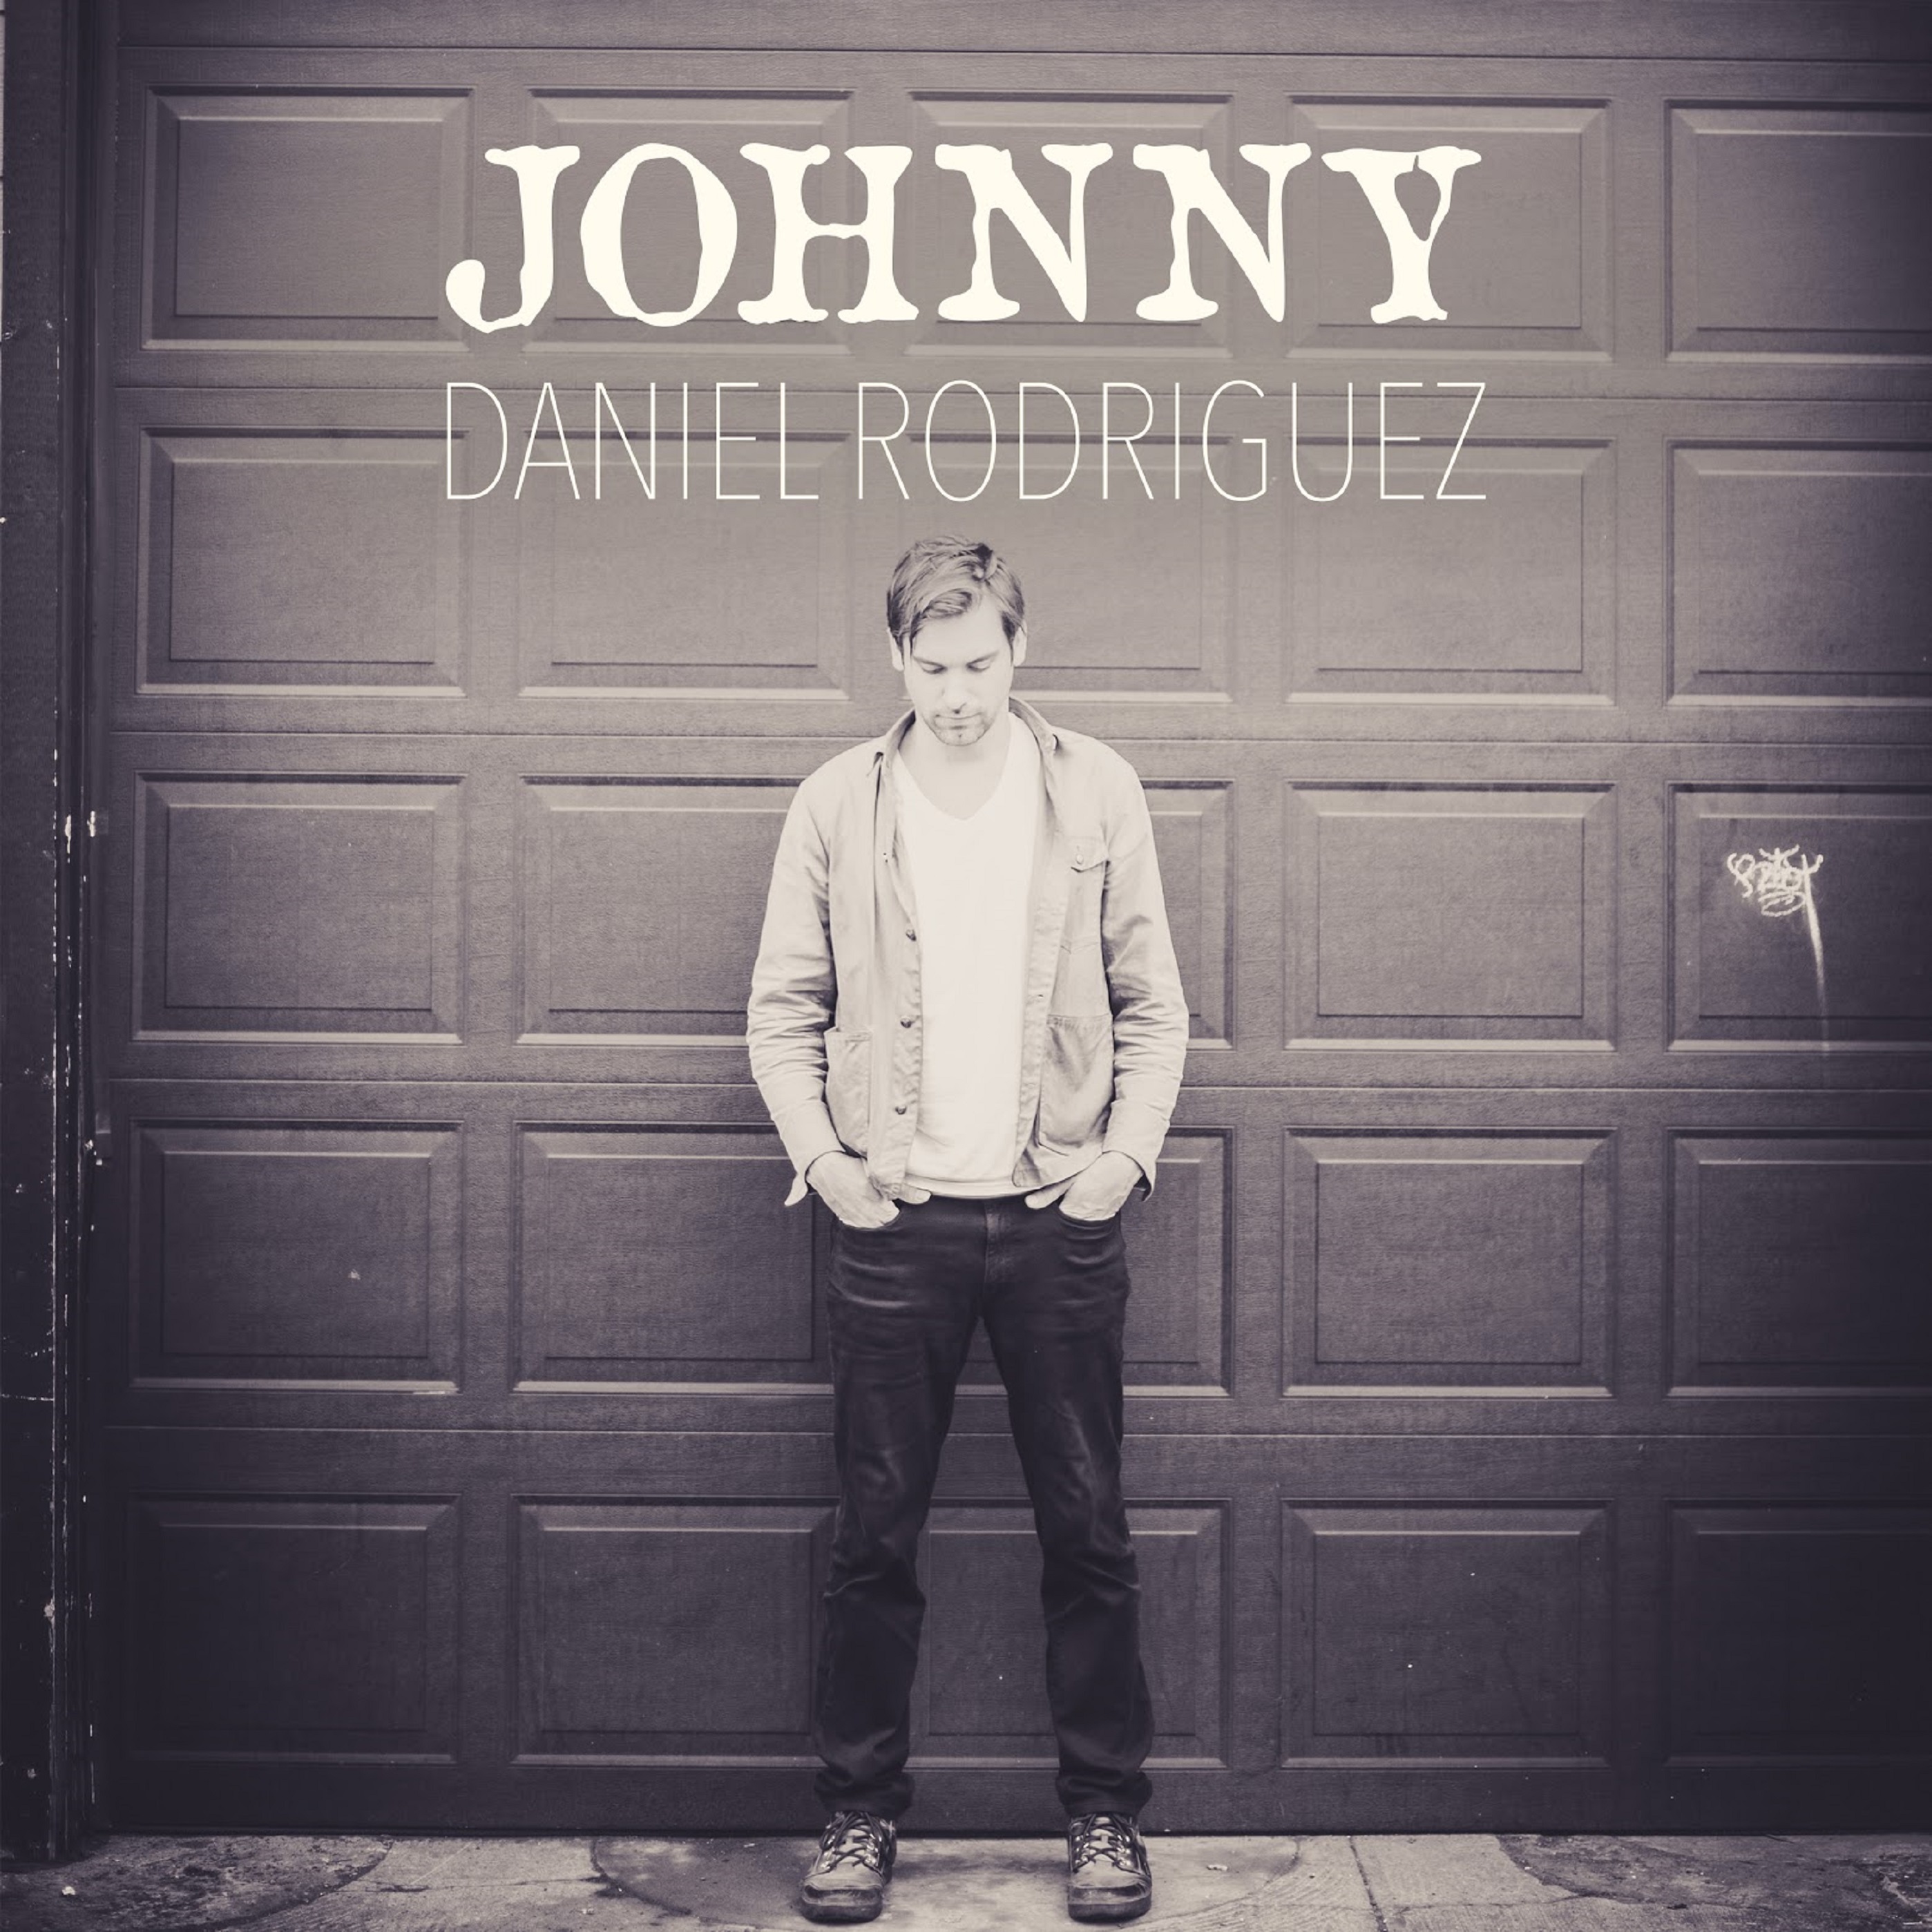 Daniel Rodriguez's New Single "Johnny"